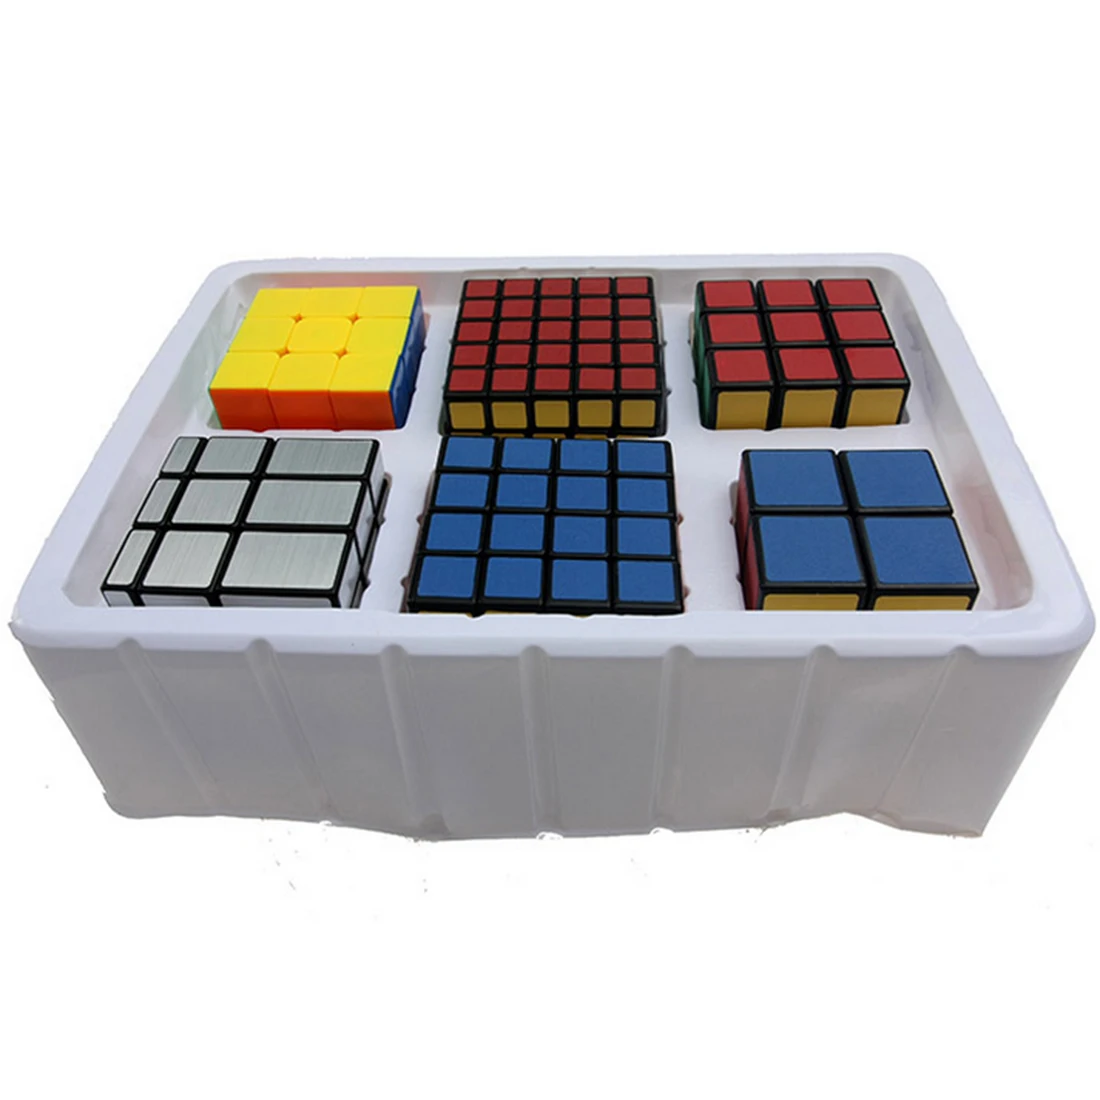 Shengshou специальный Pacakge набор из 6 предметов, волшебный куб, набор зеркальный куб, включая 2x2 3x3 4x4 5x5